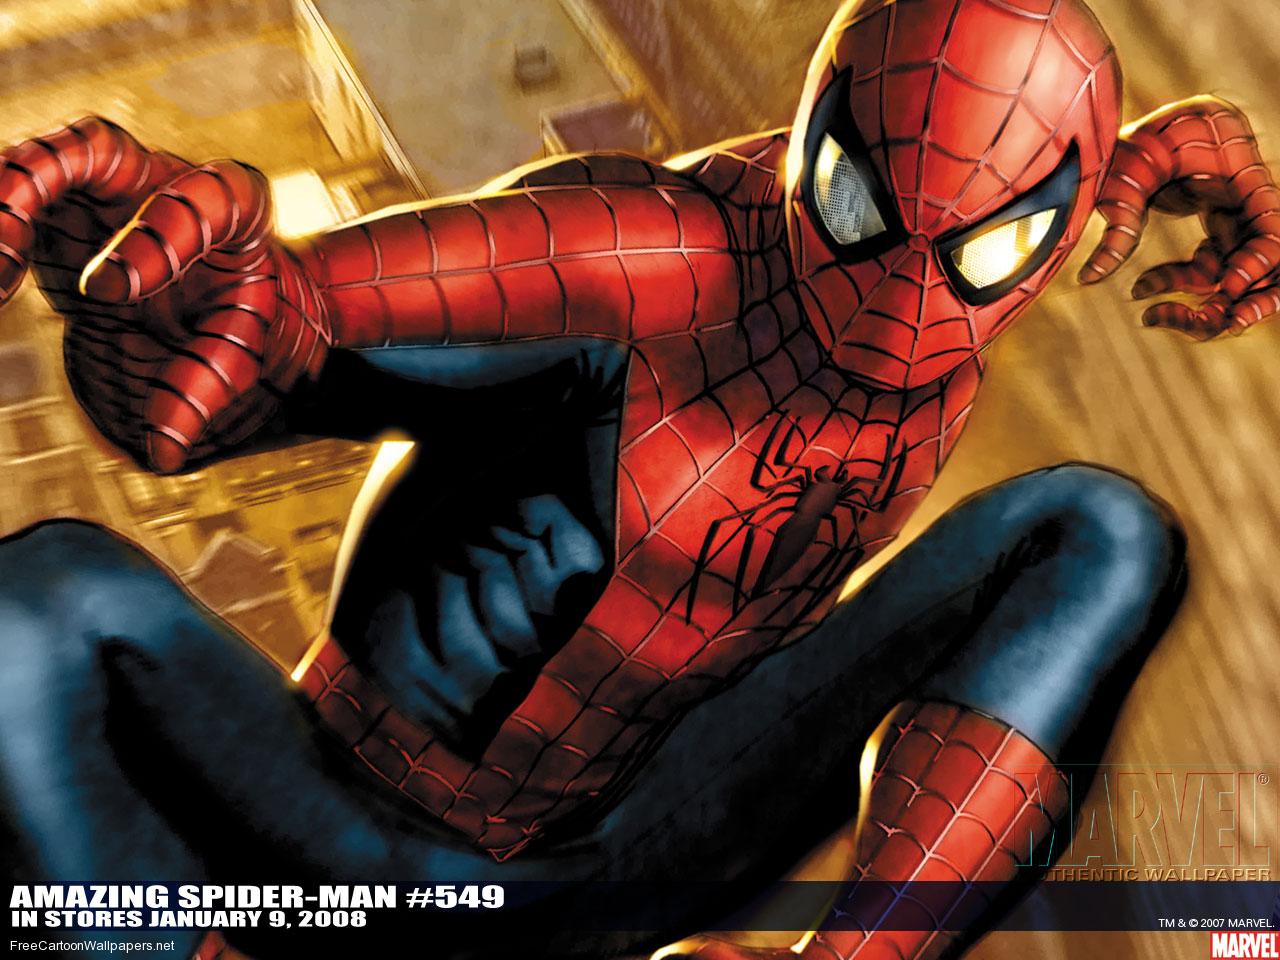 The Spiderman Wallpaper Spiderman